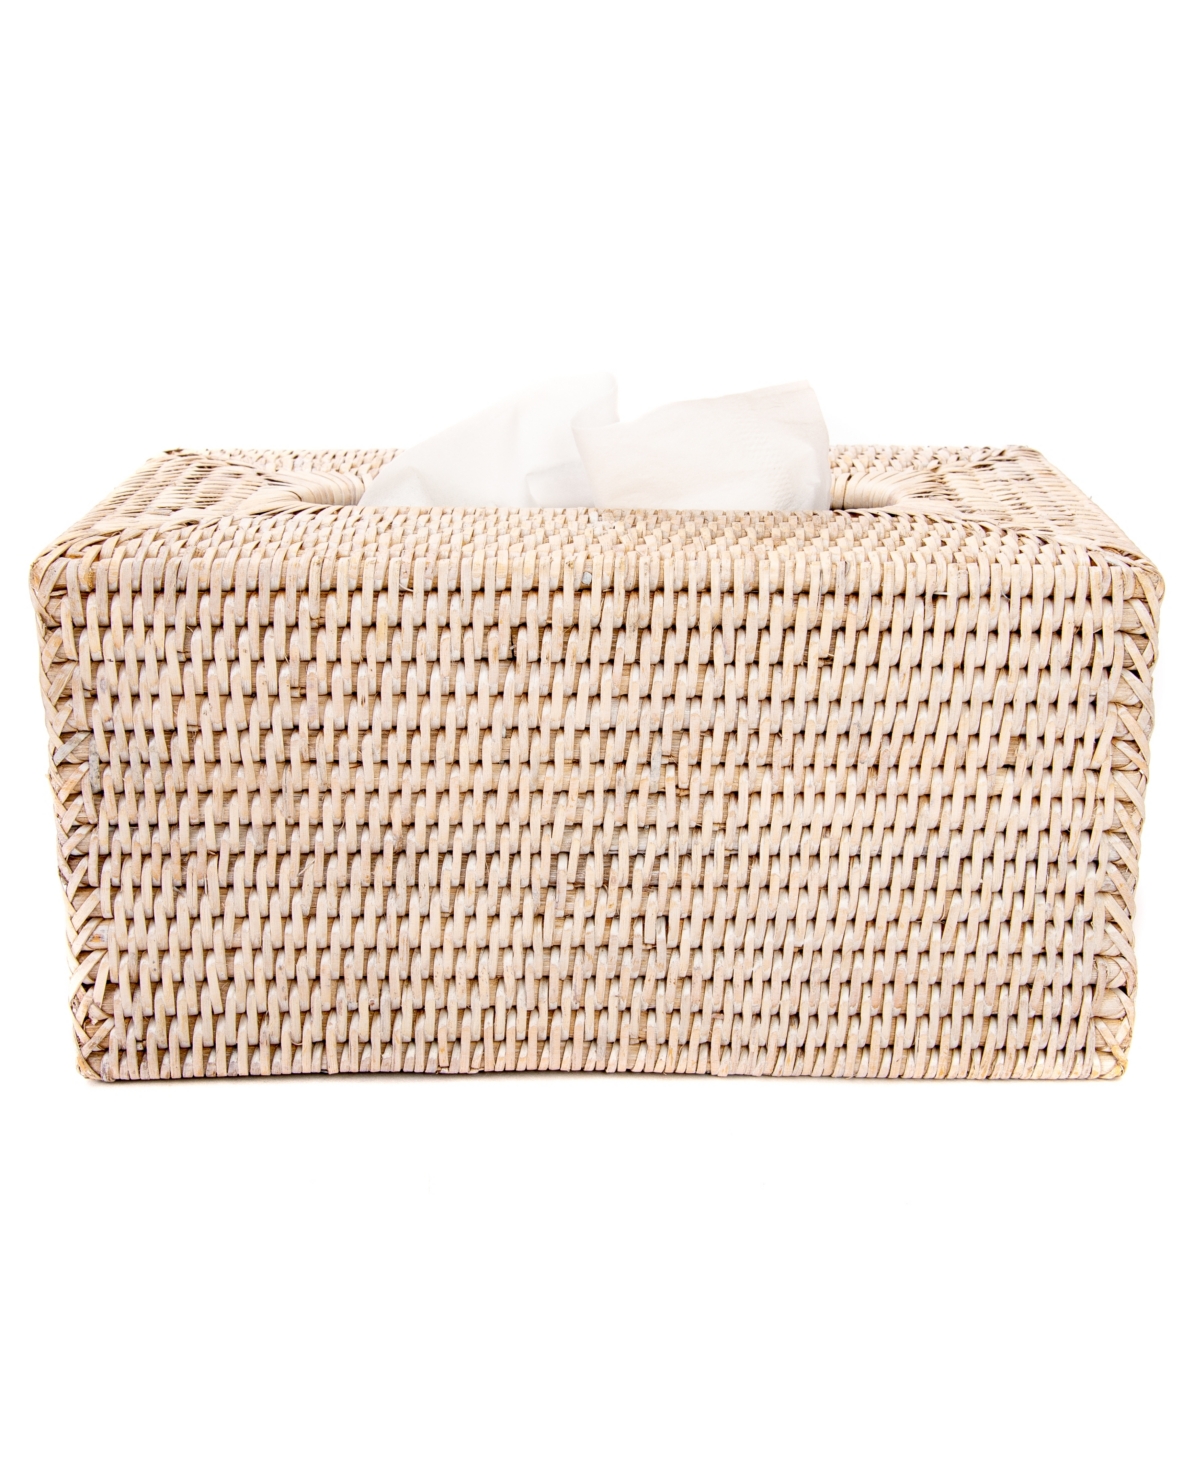 Artifacts Rattan Rectangular Tissue Box Cover - Honey Brown